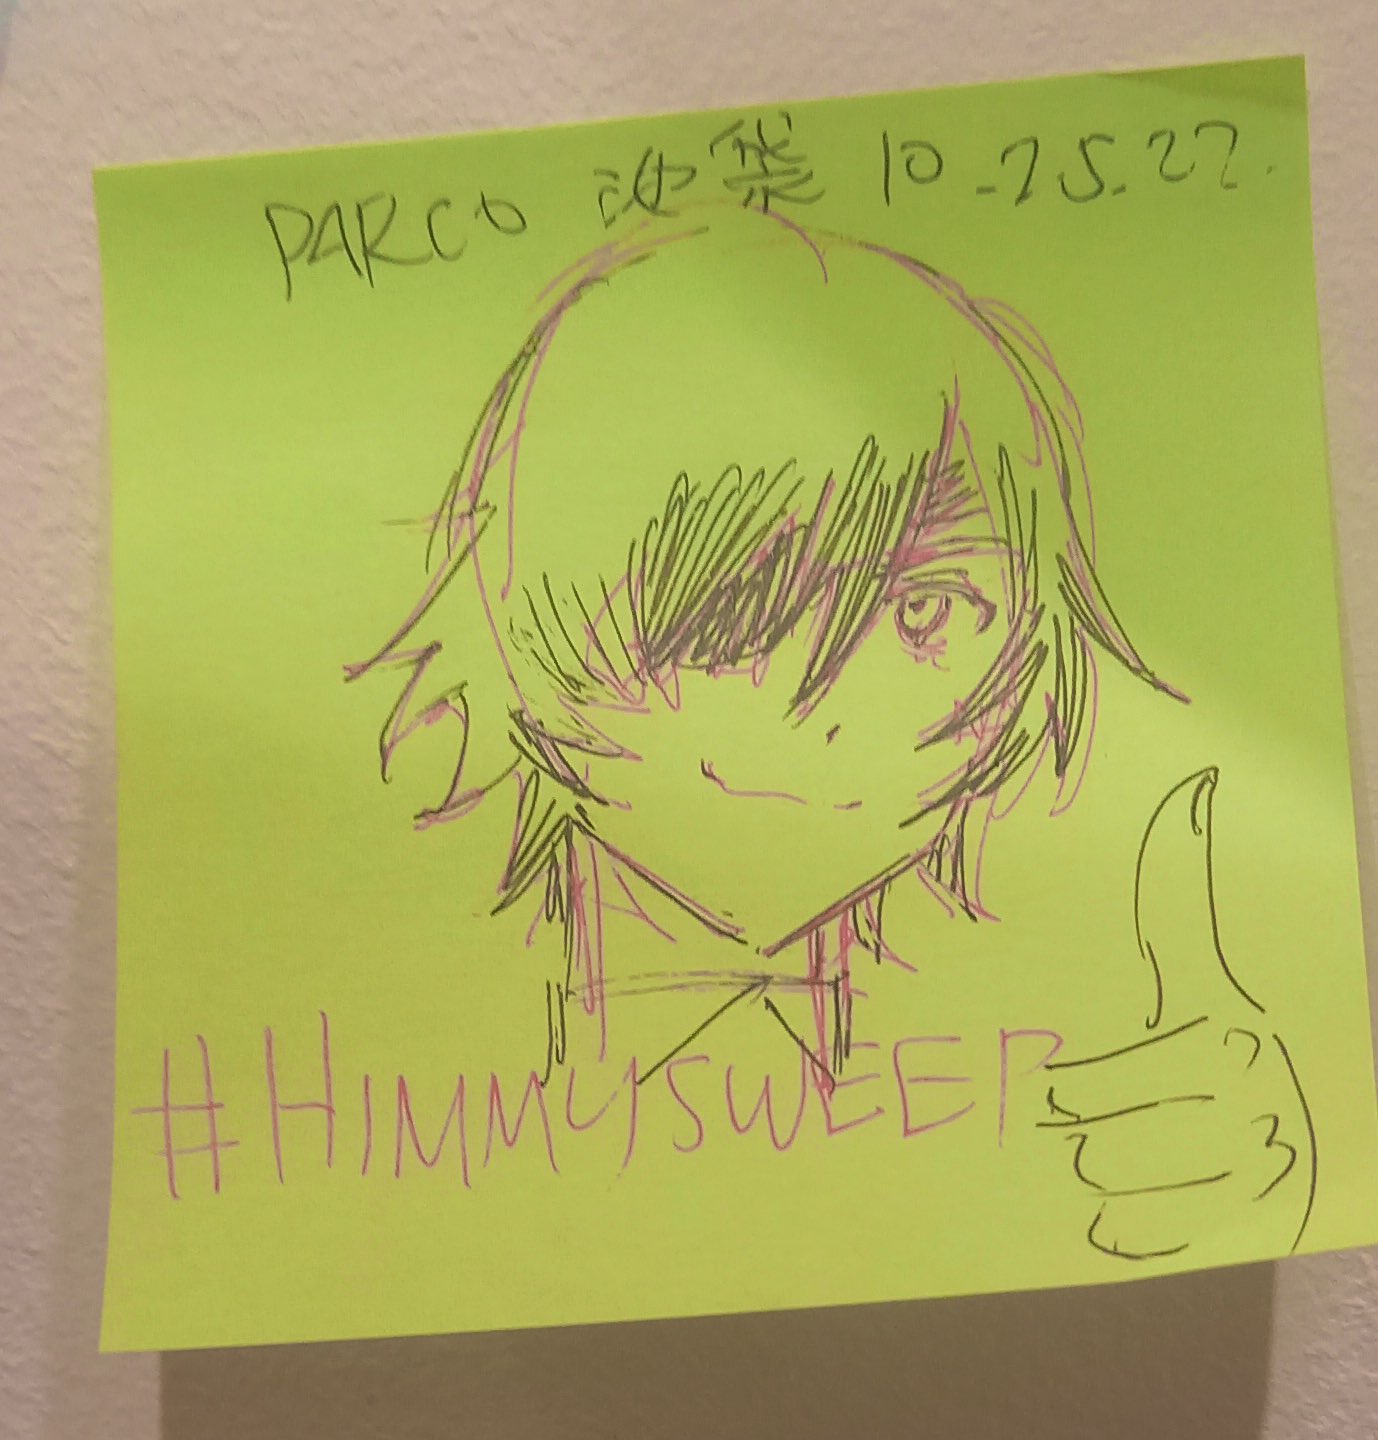 Himeno Barf Sex Gaming On Twitter Himenosweep At Parco Ikebukuro